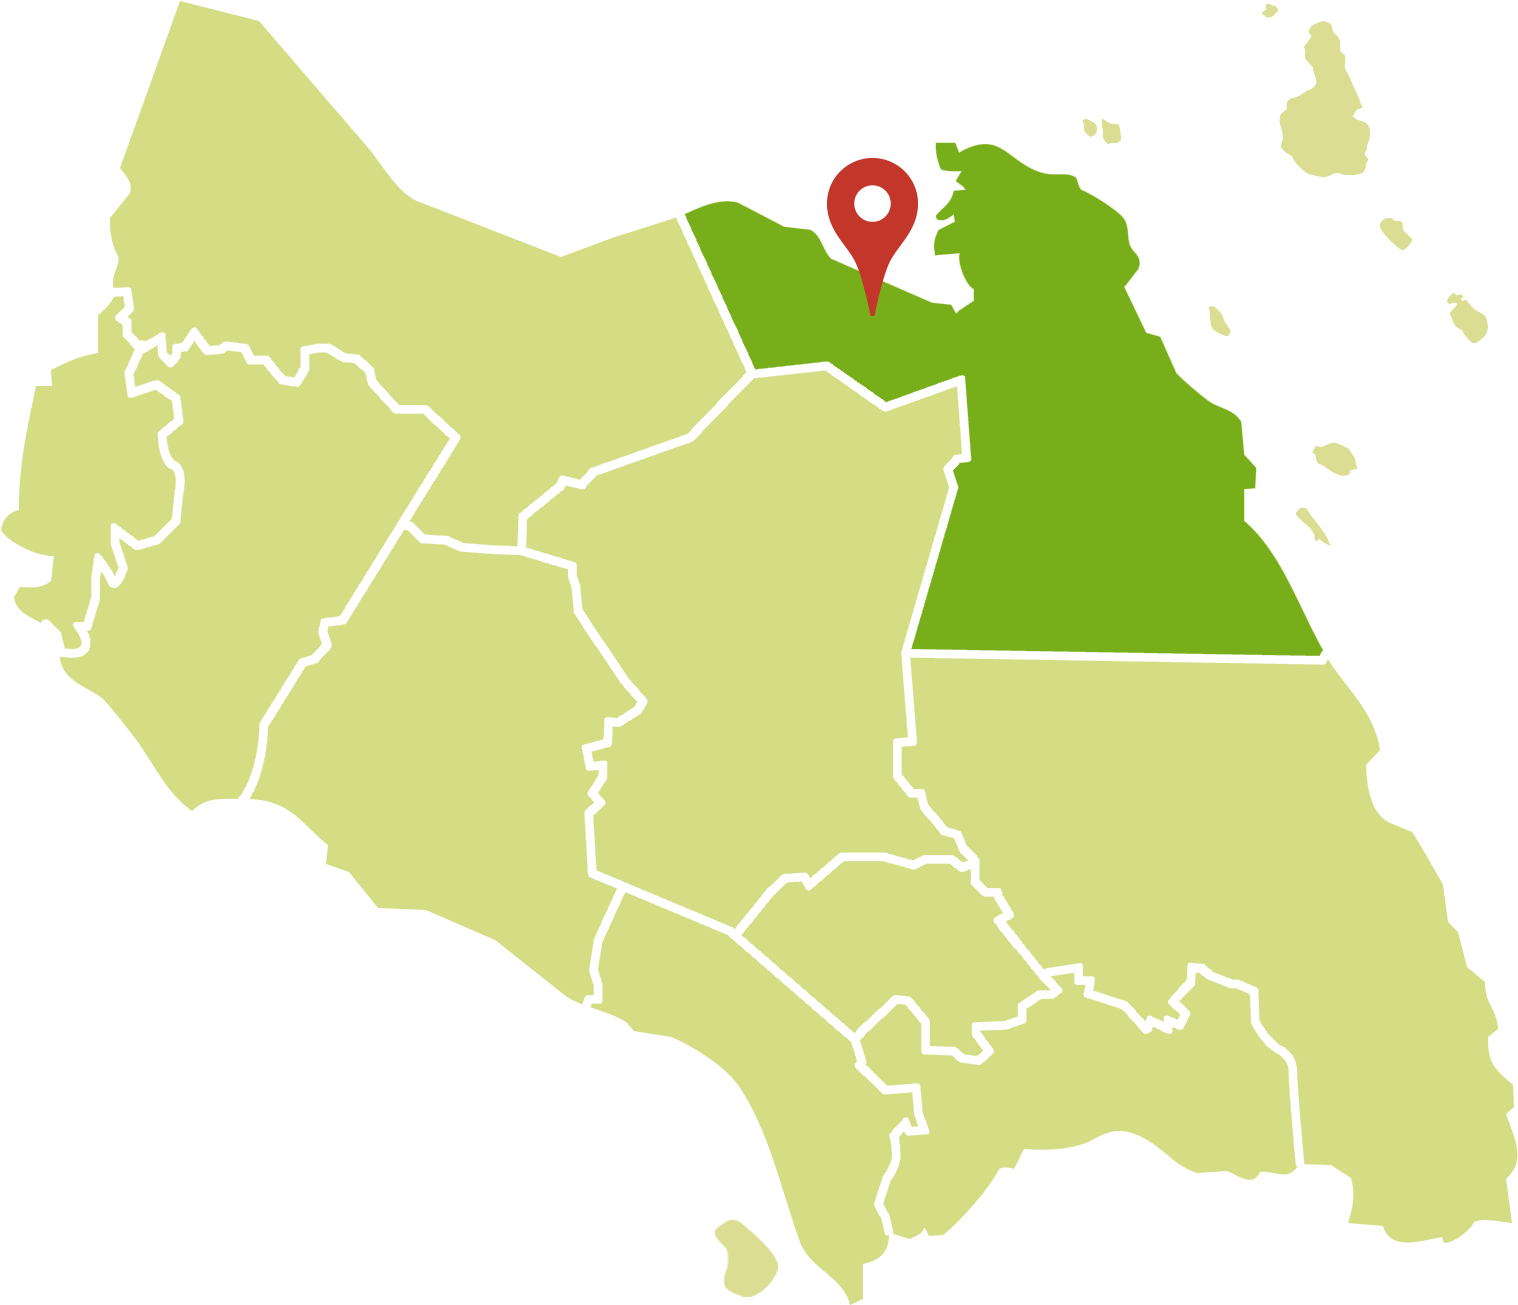 Download Endau Rompin Peta Map Map Mersing Johor Png Png Image With No Background Pngkey Com